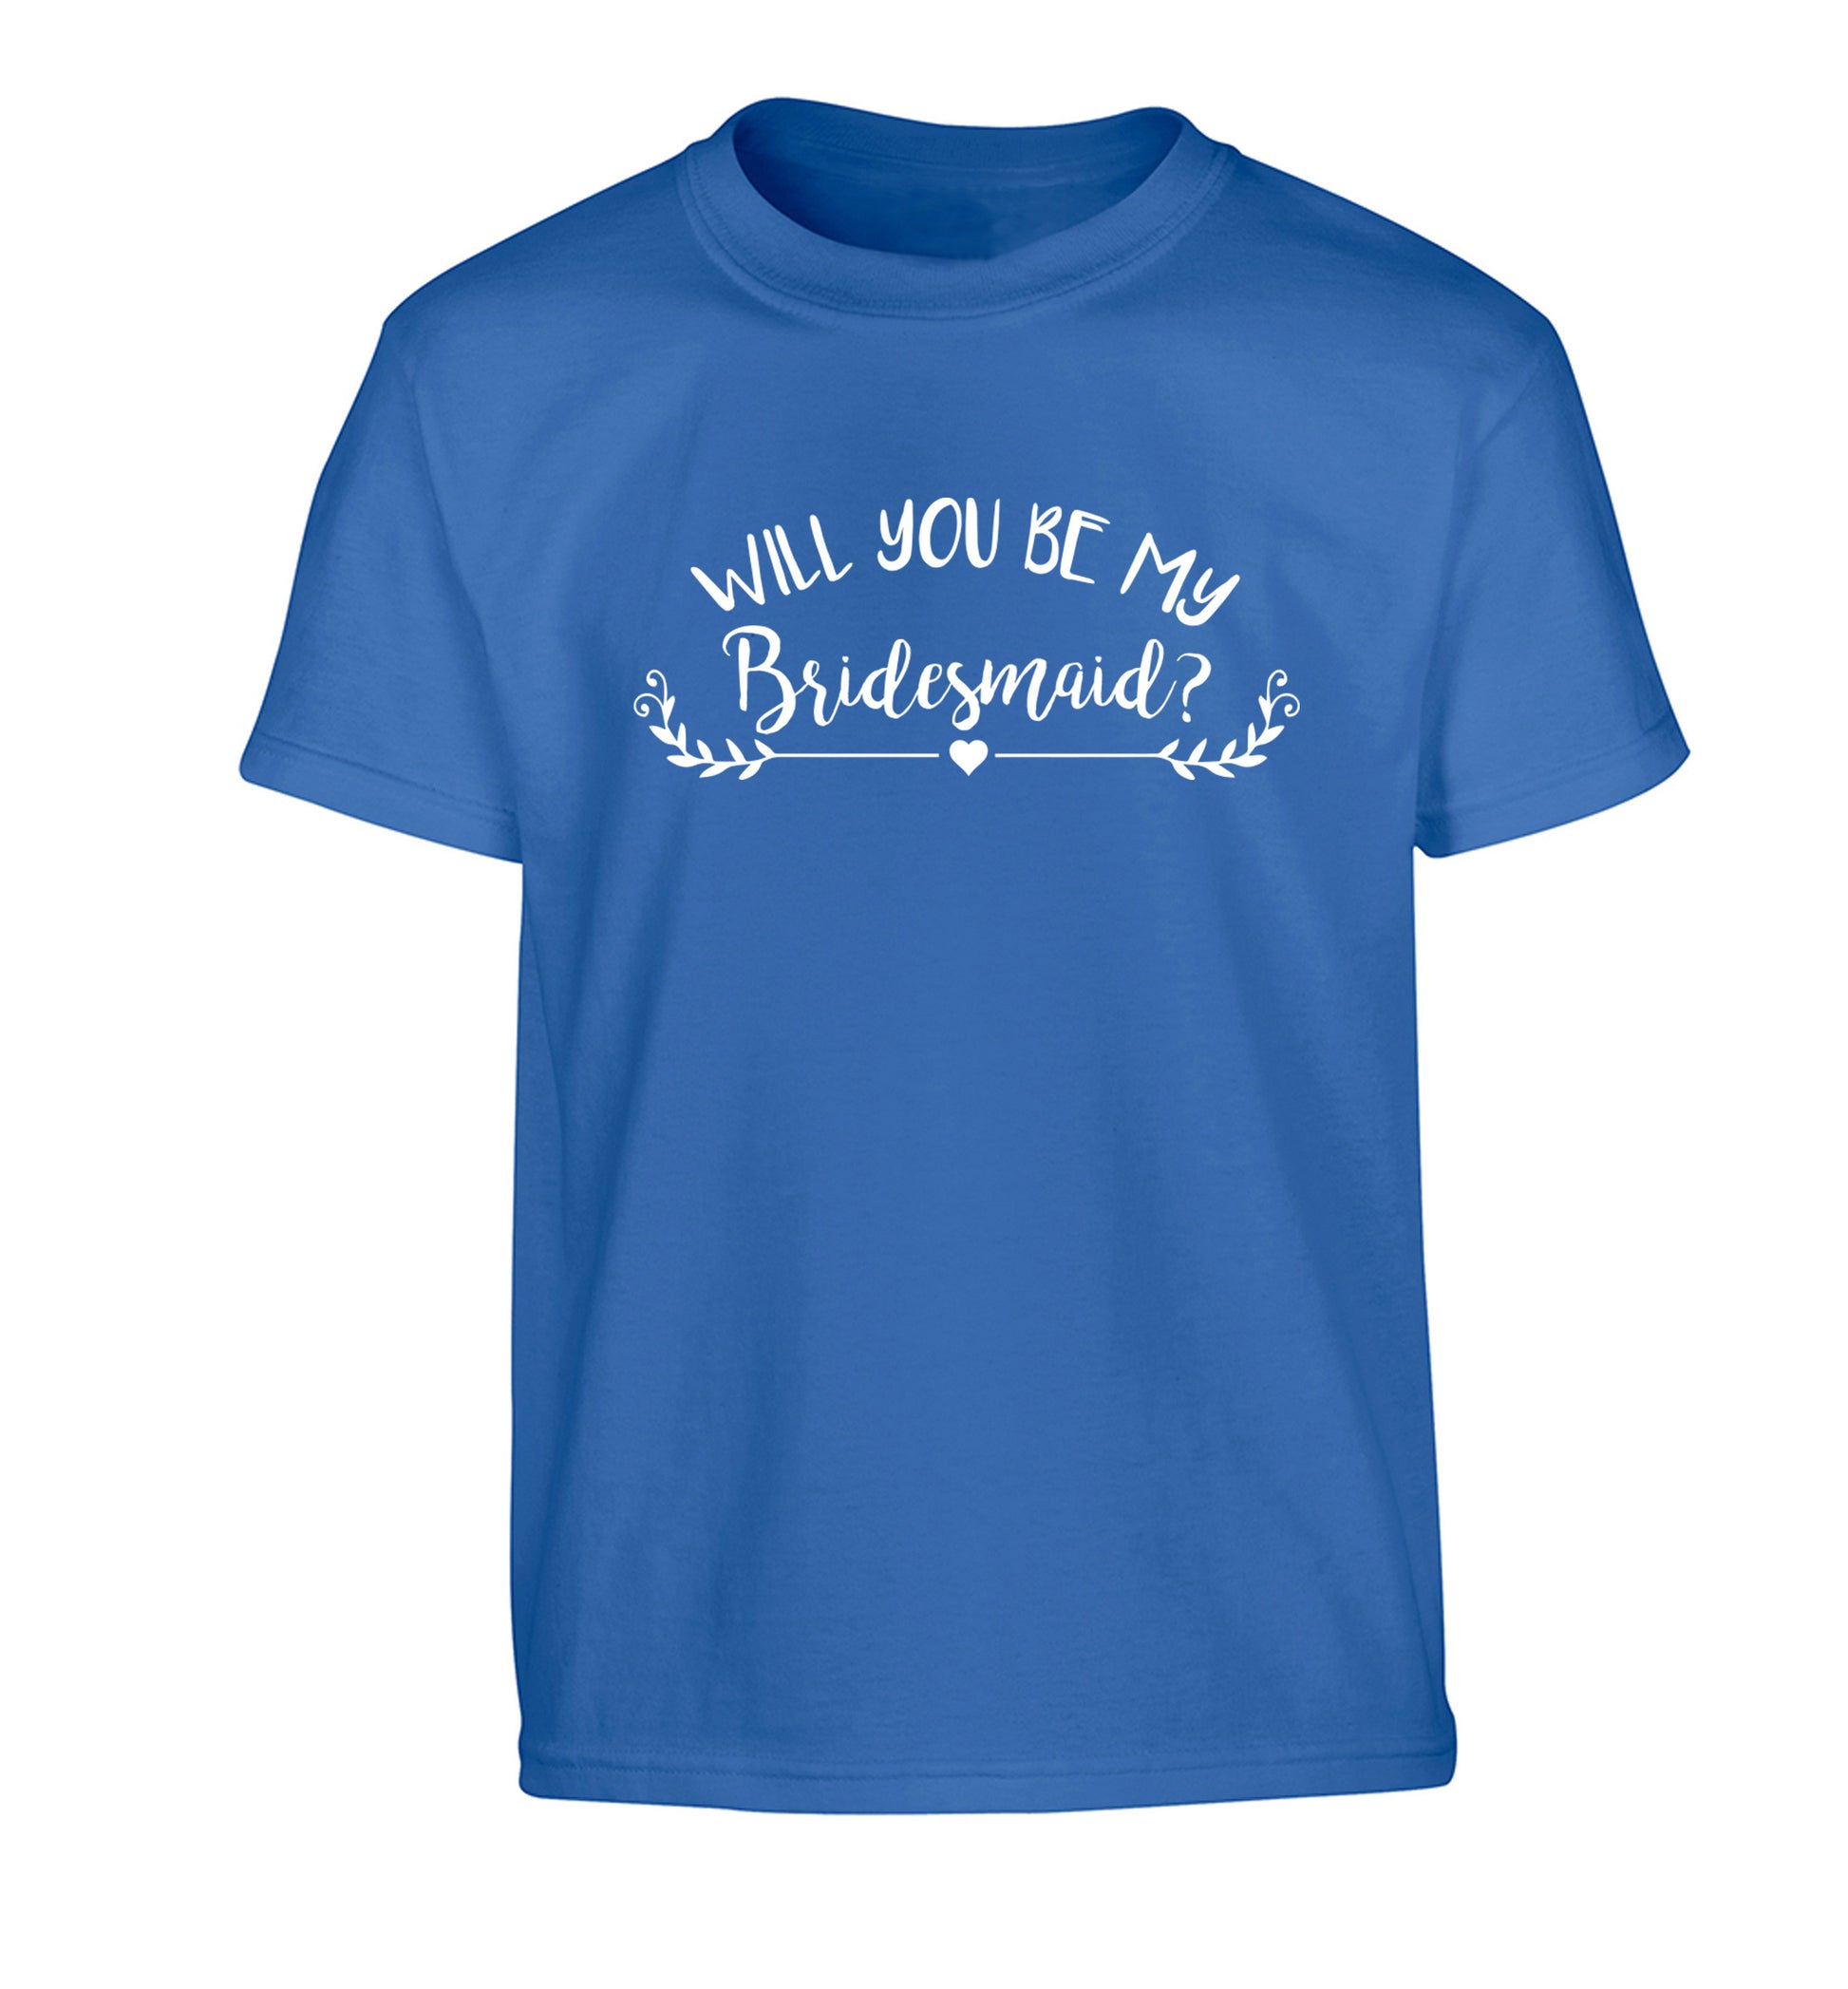 Will you be my bridesmaid? Children's blue Tshirt 12-14 Years